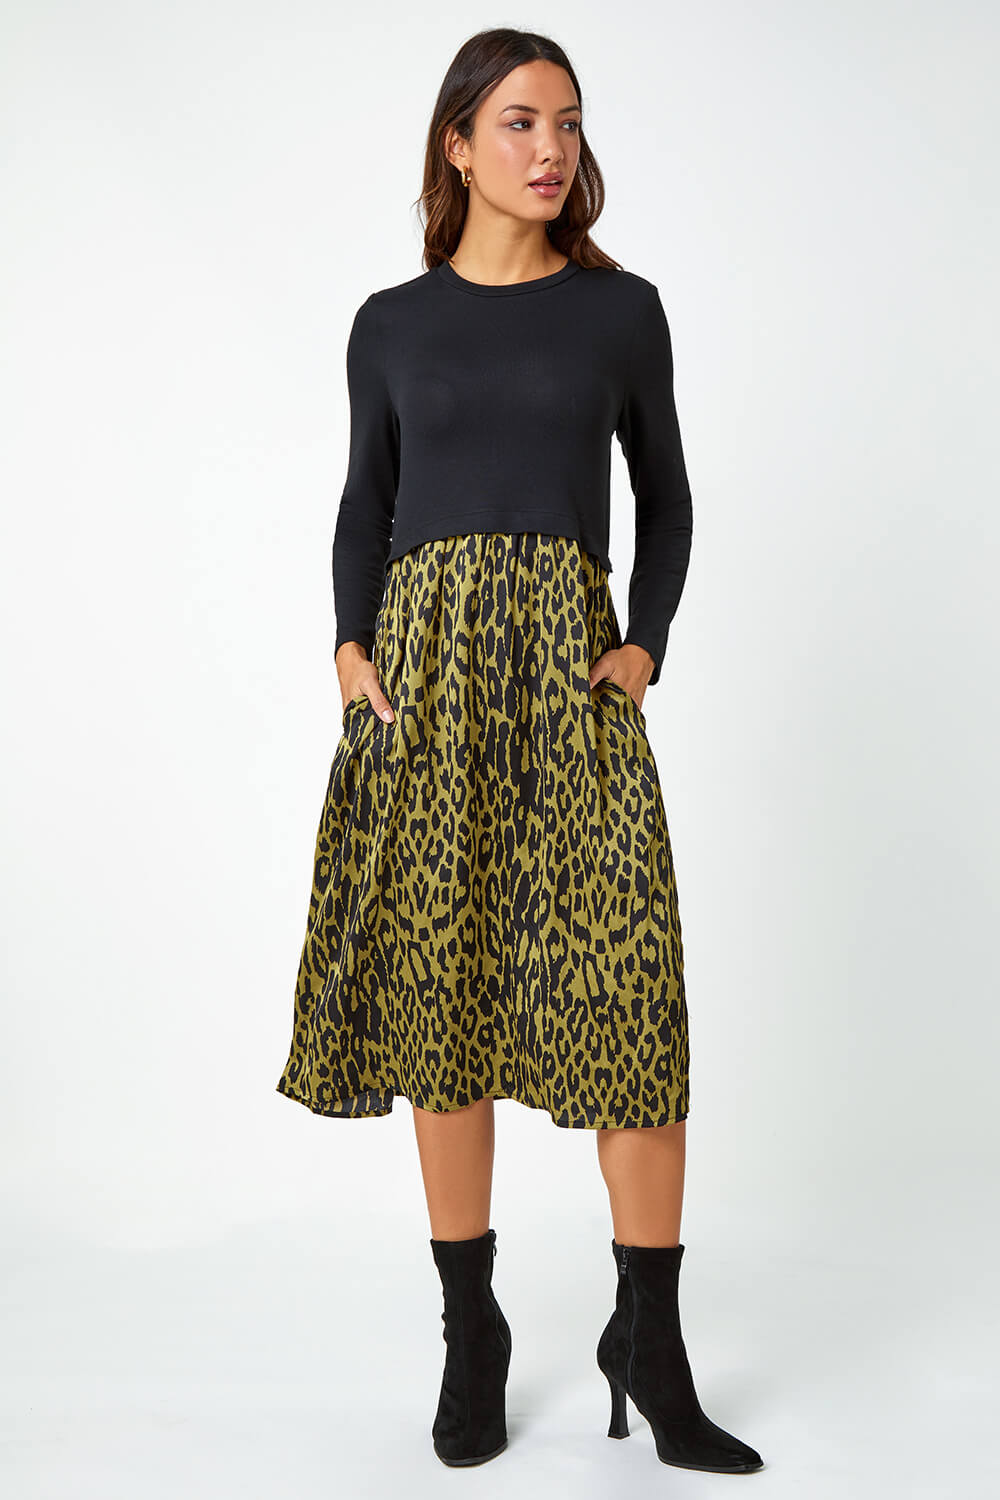 Black Contrast Leopard Print Pocket Knit Midi Dress, Image 2 of 5